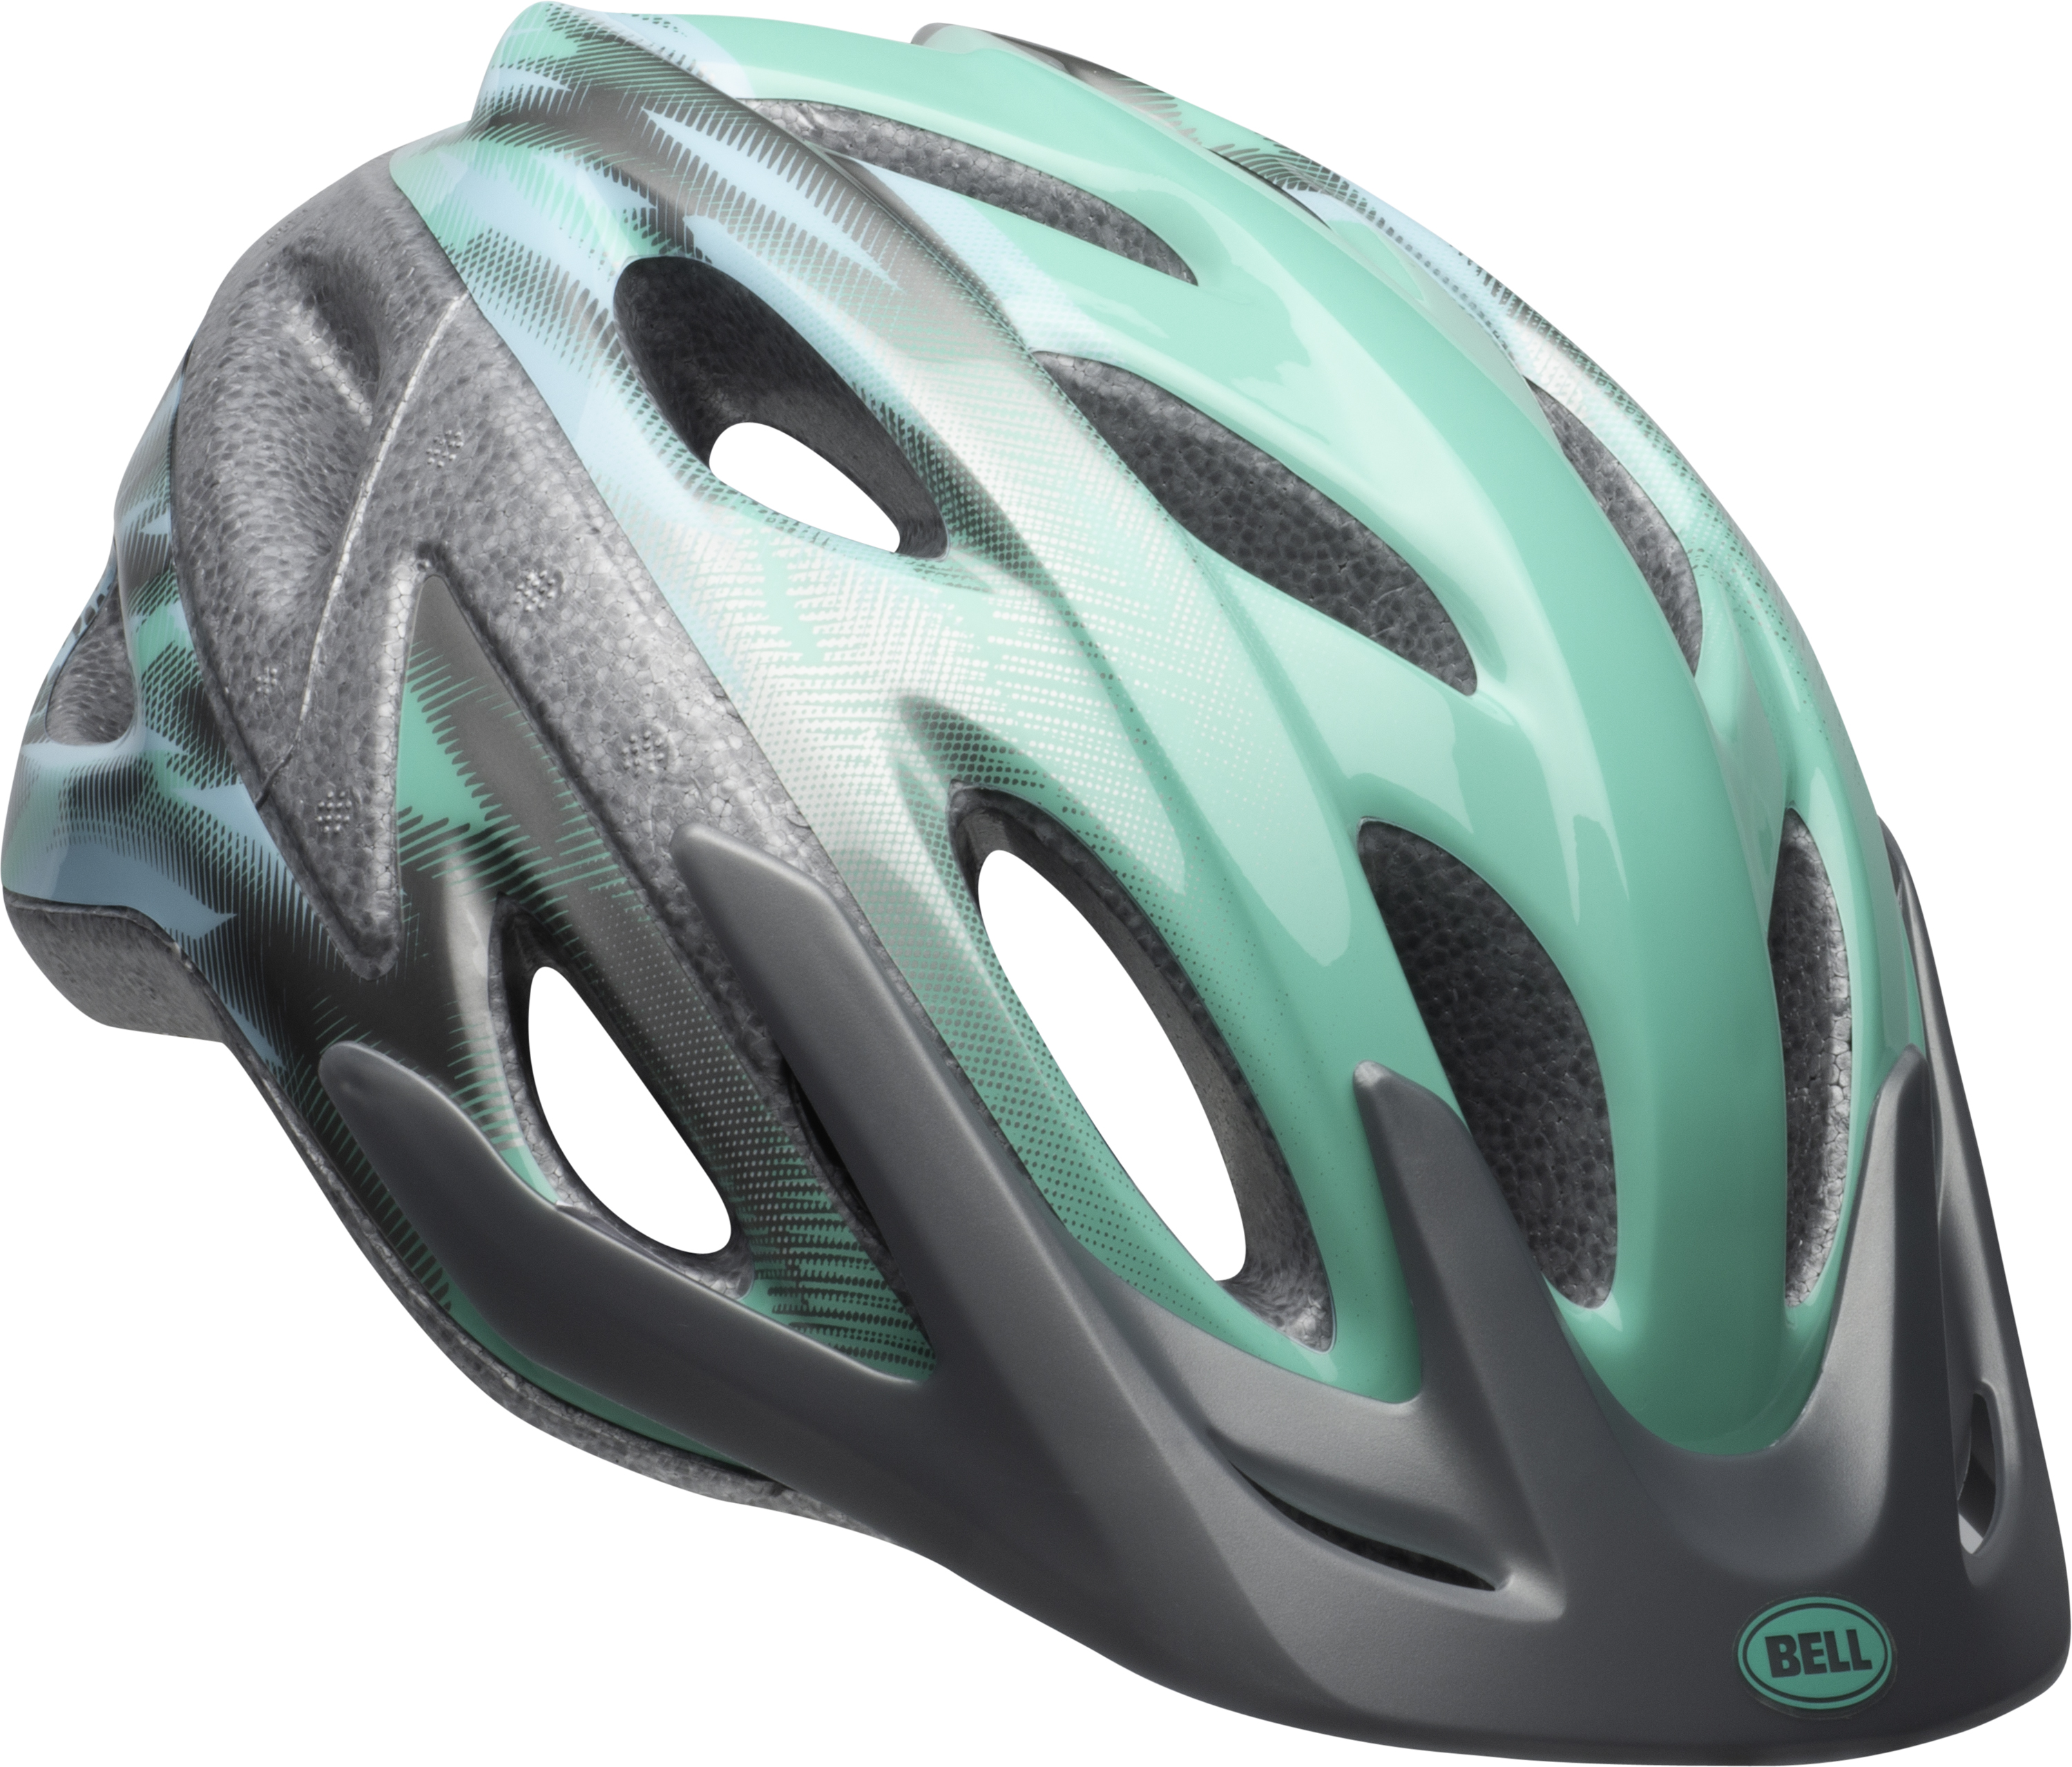 Bell Axle Bike Helmet, Mint, Women's 14+ (52-58cm) - image 1 of 9